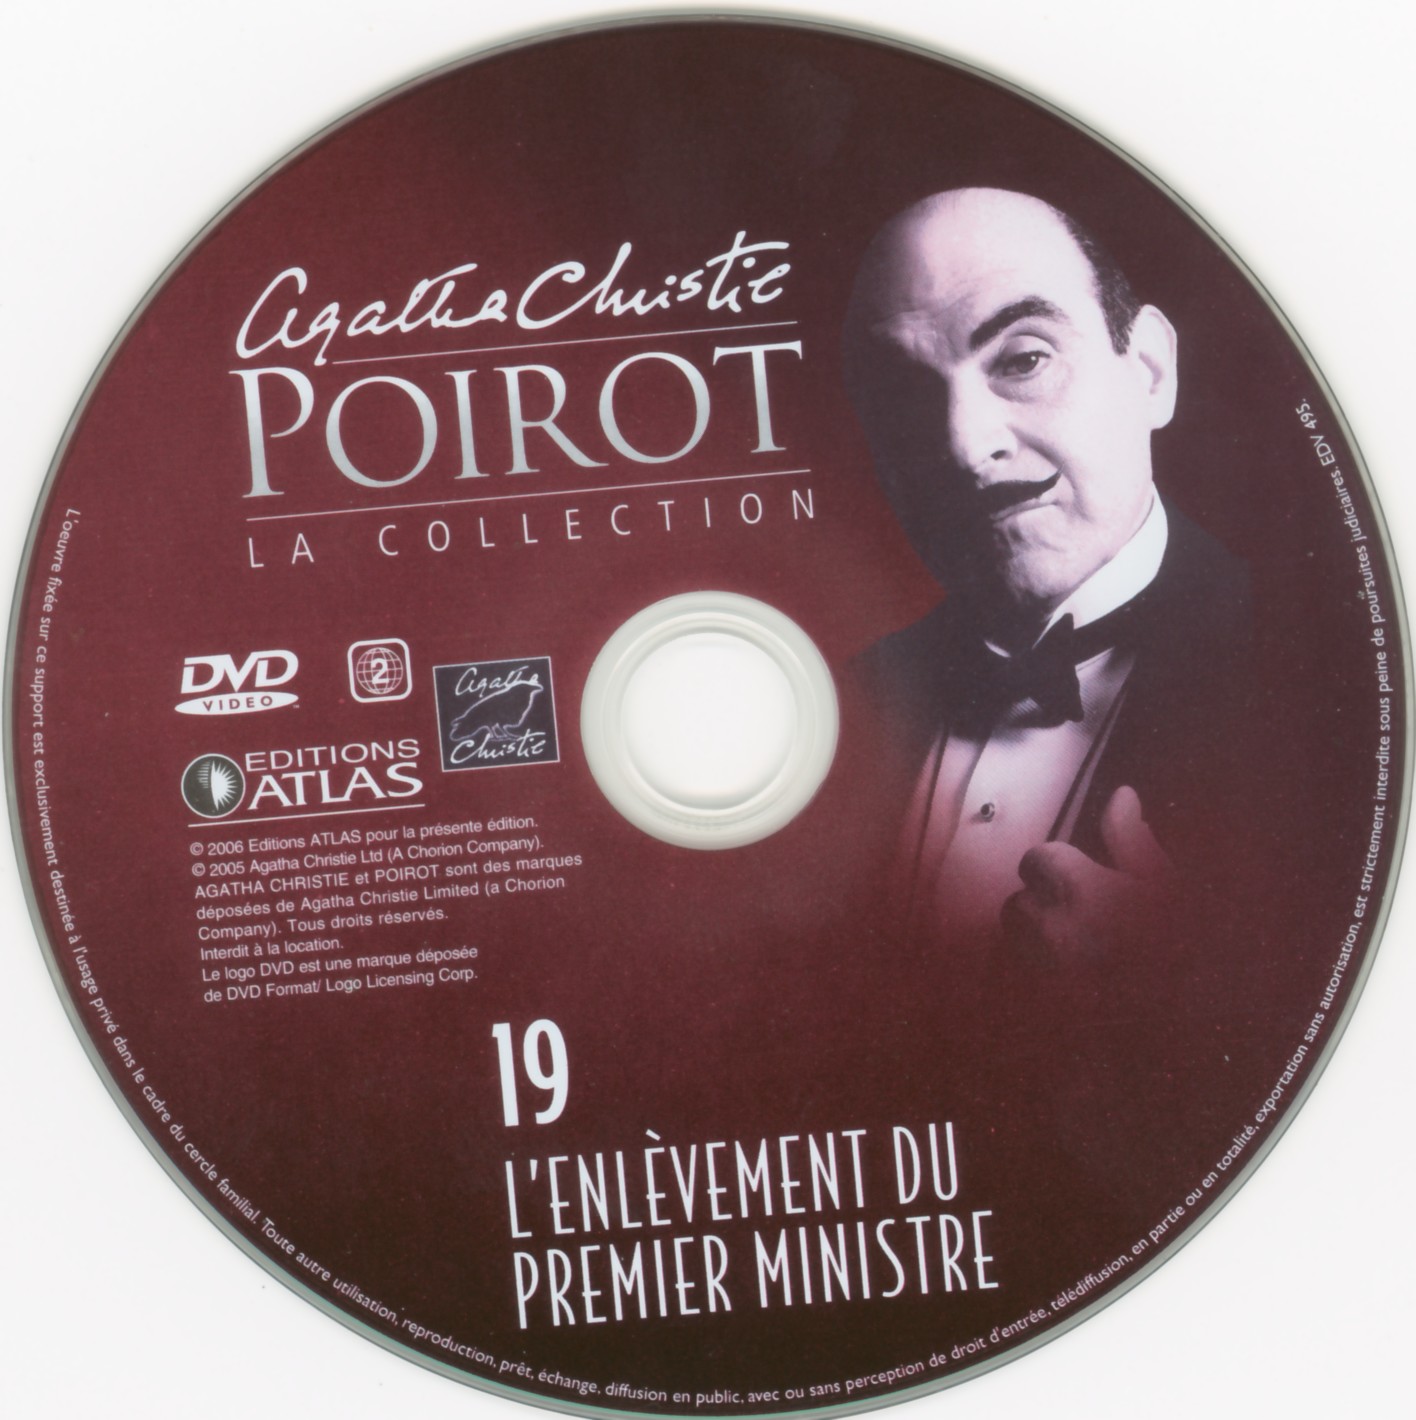 Hercule Poirot vol 19